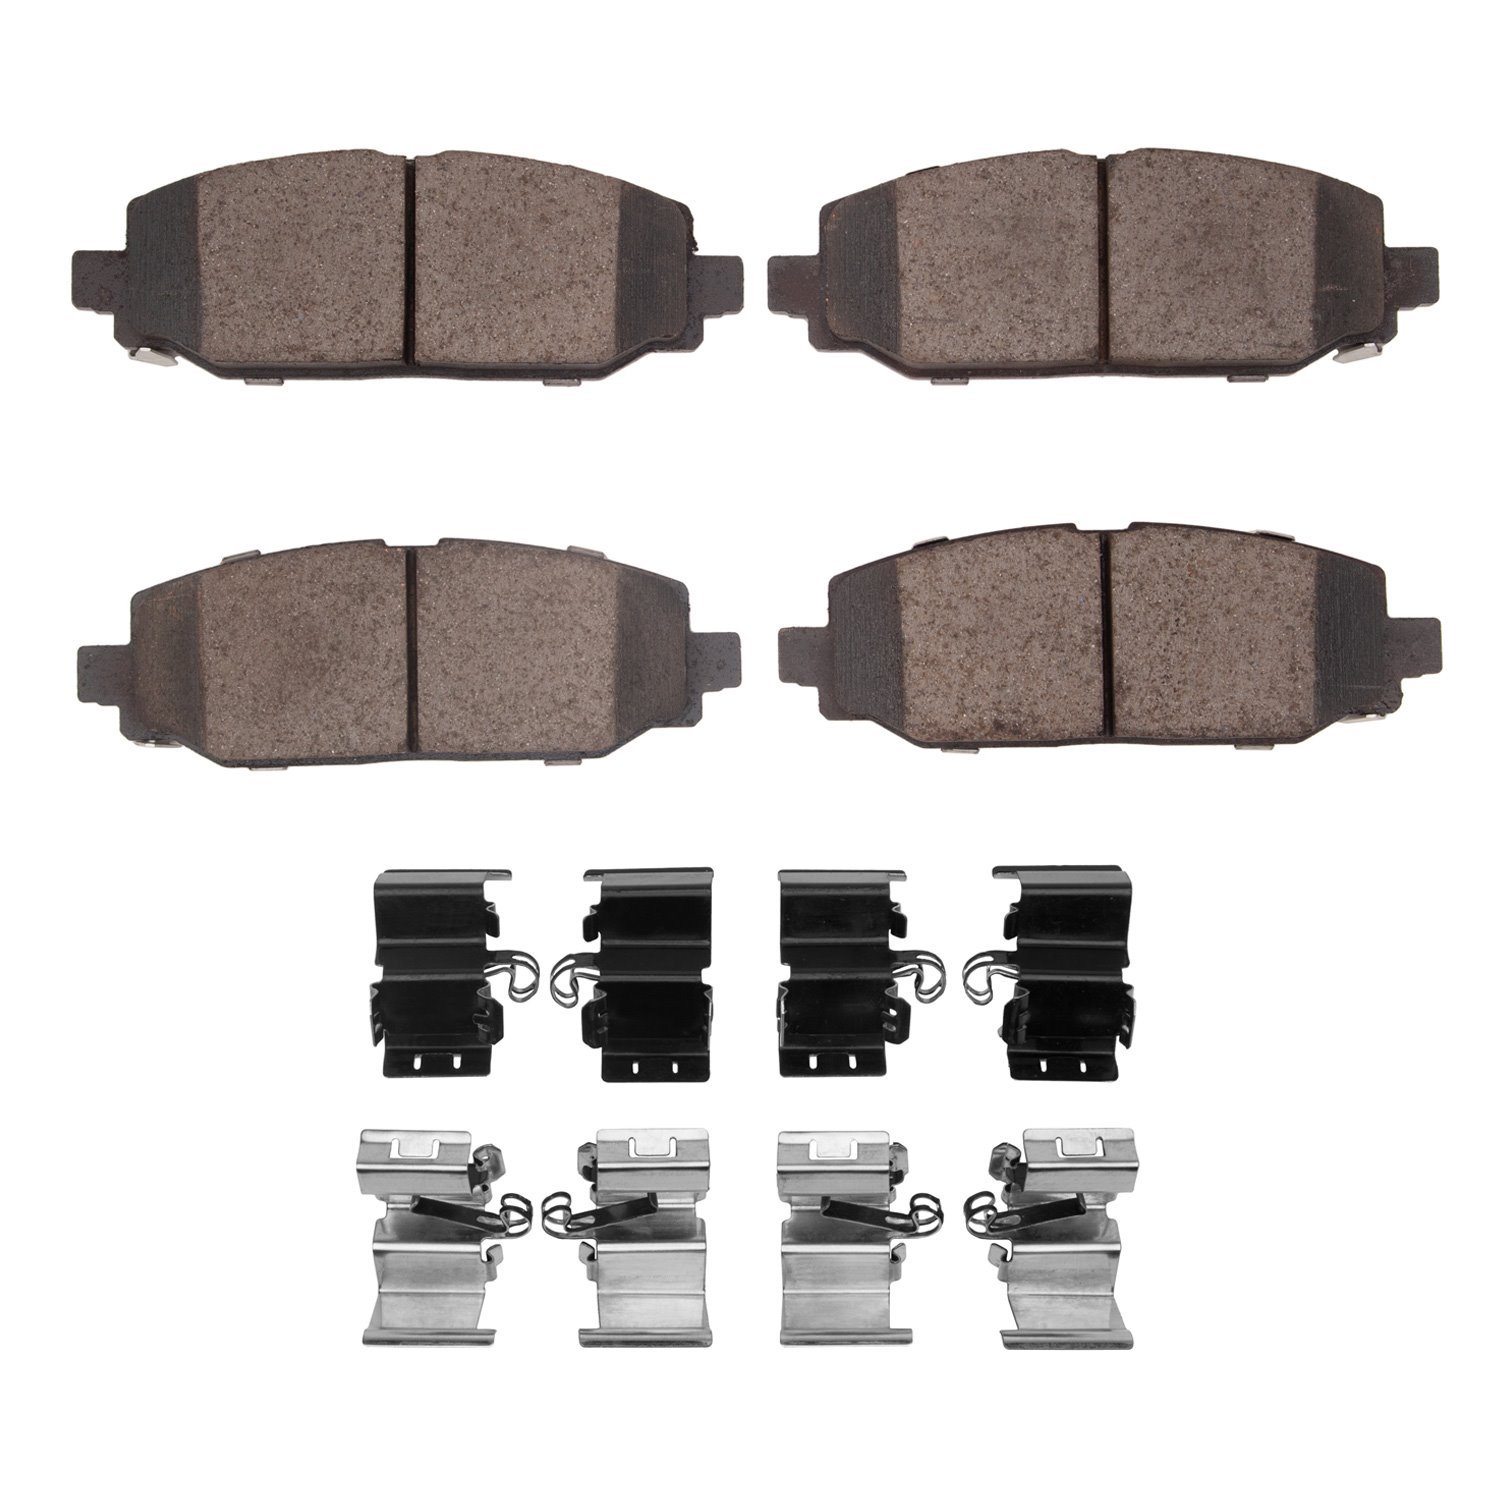 1400-2186-01 Ultimate-Duty Brake Pads & Hardware Kit, Fits Select Mopar, Position: Rear